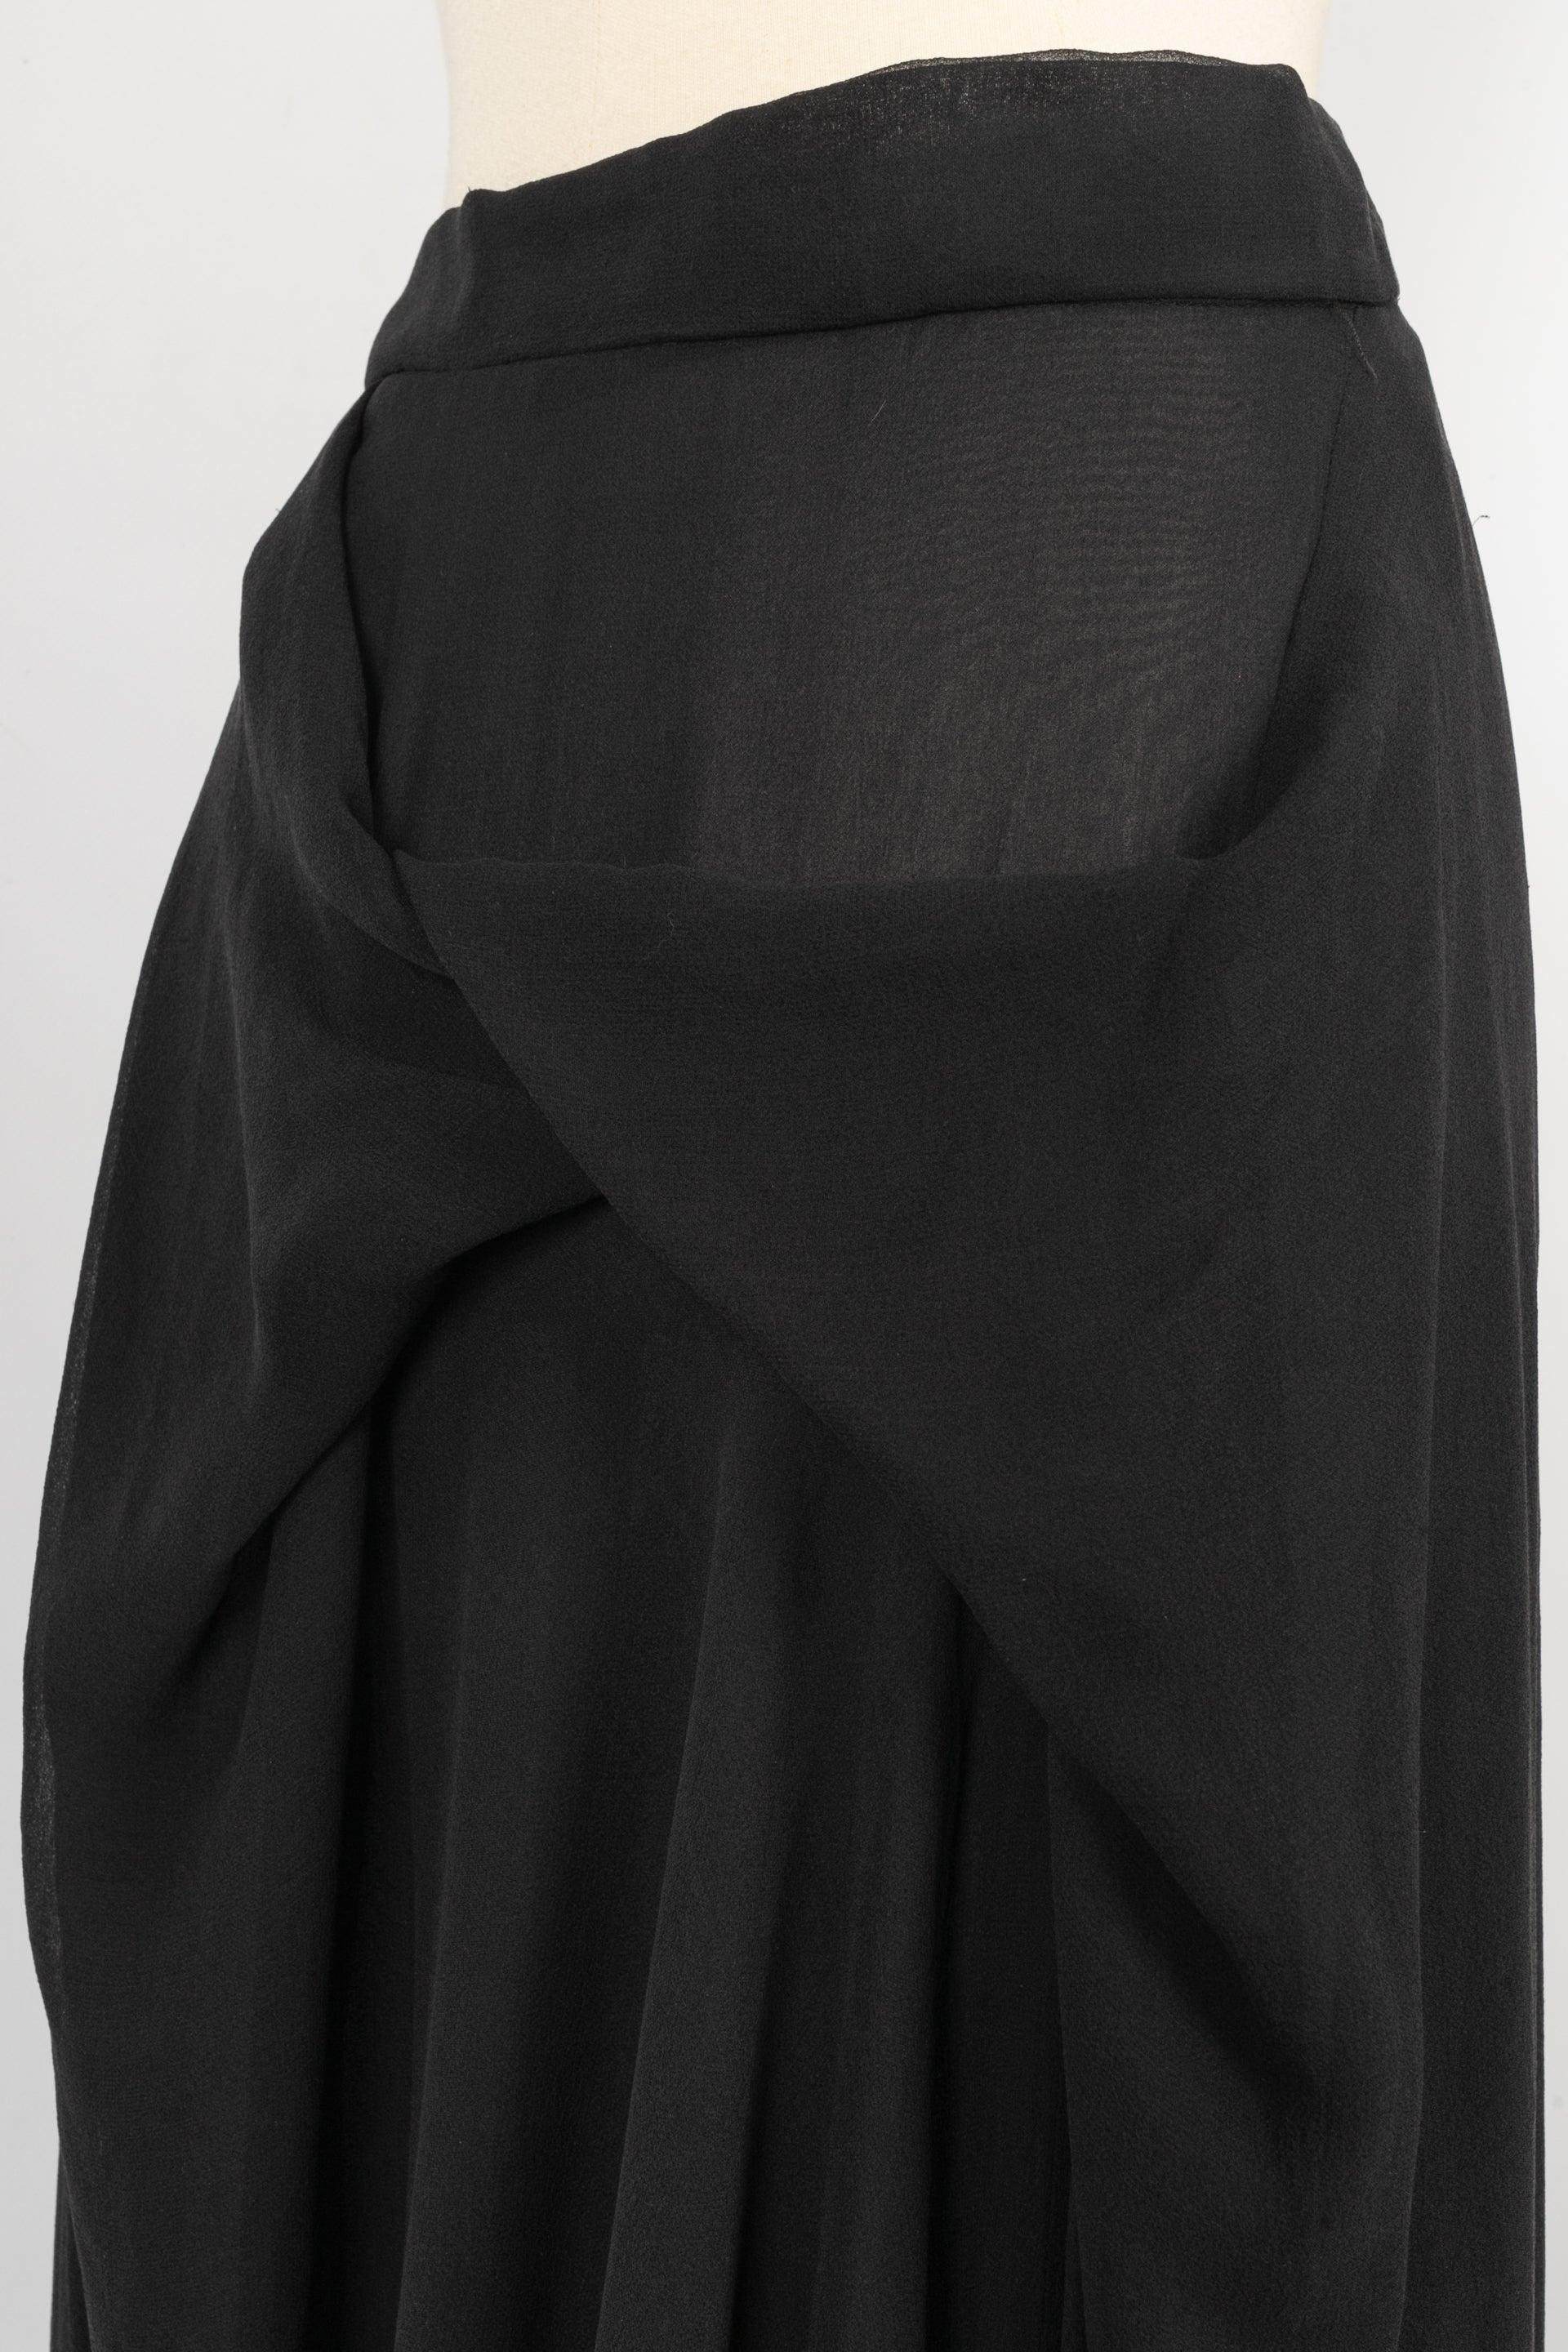 Vivienne Westwood Black Silk Long Asymmetrical Skirt For Sale 1